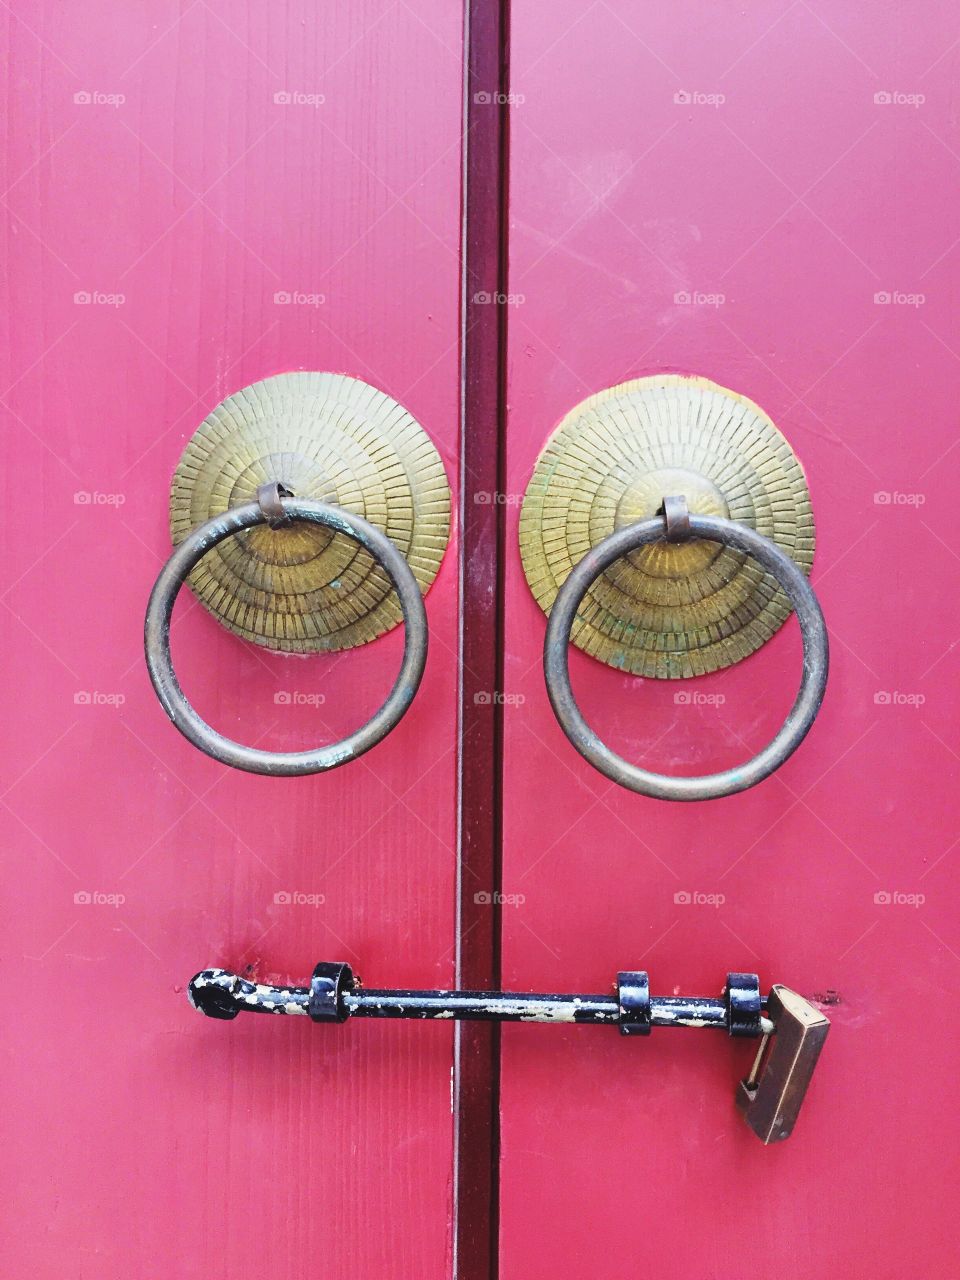 Ancient Chinese door bell